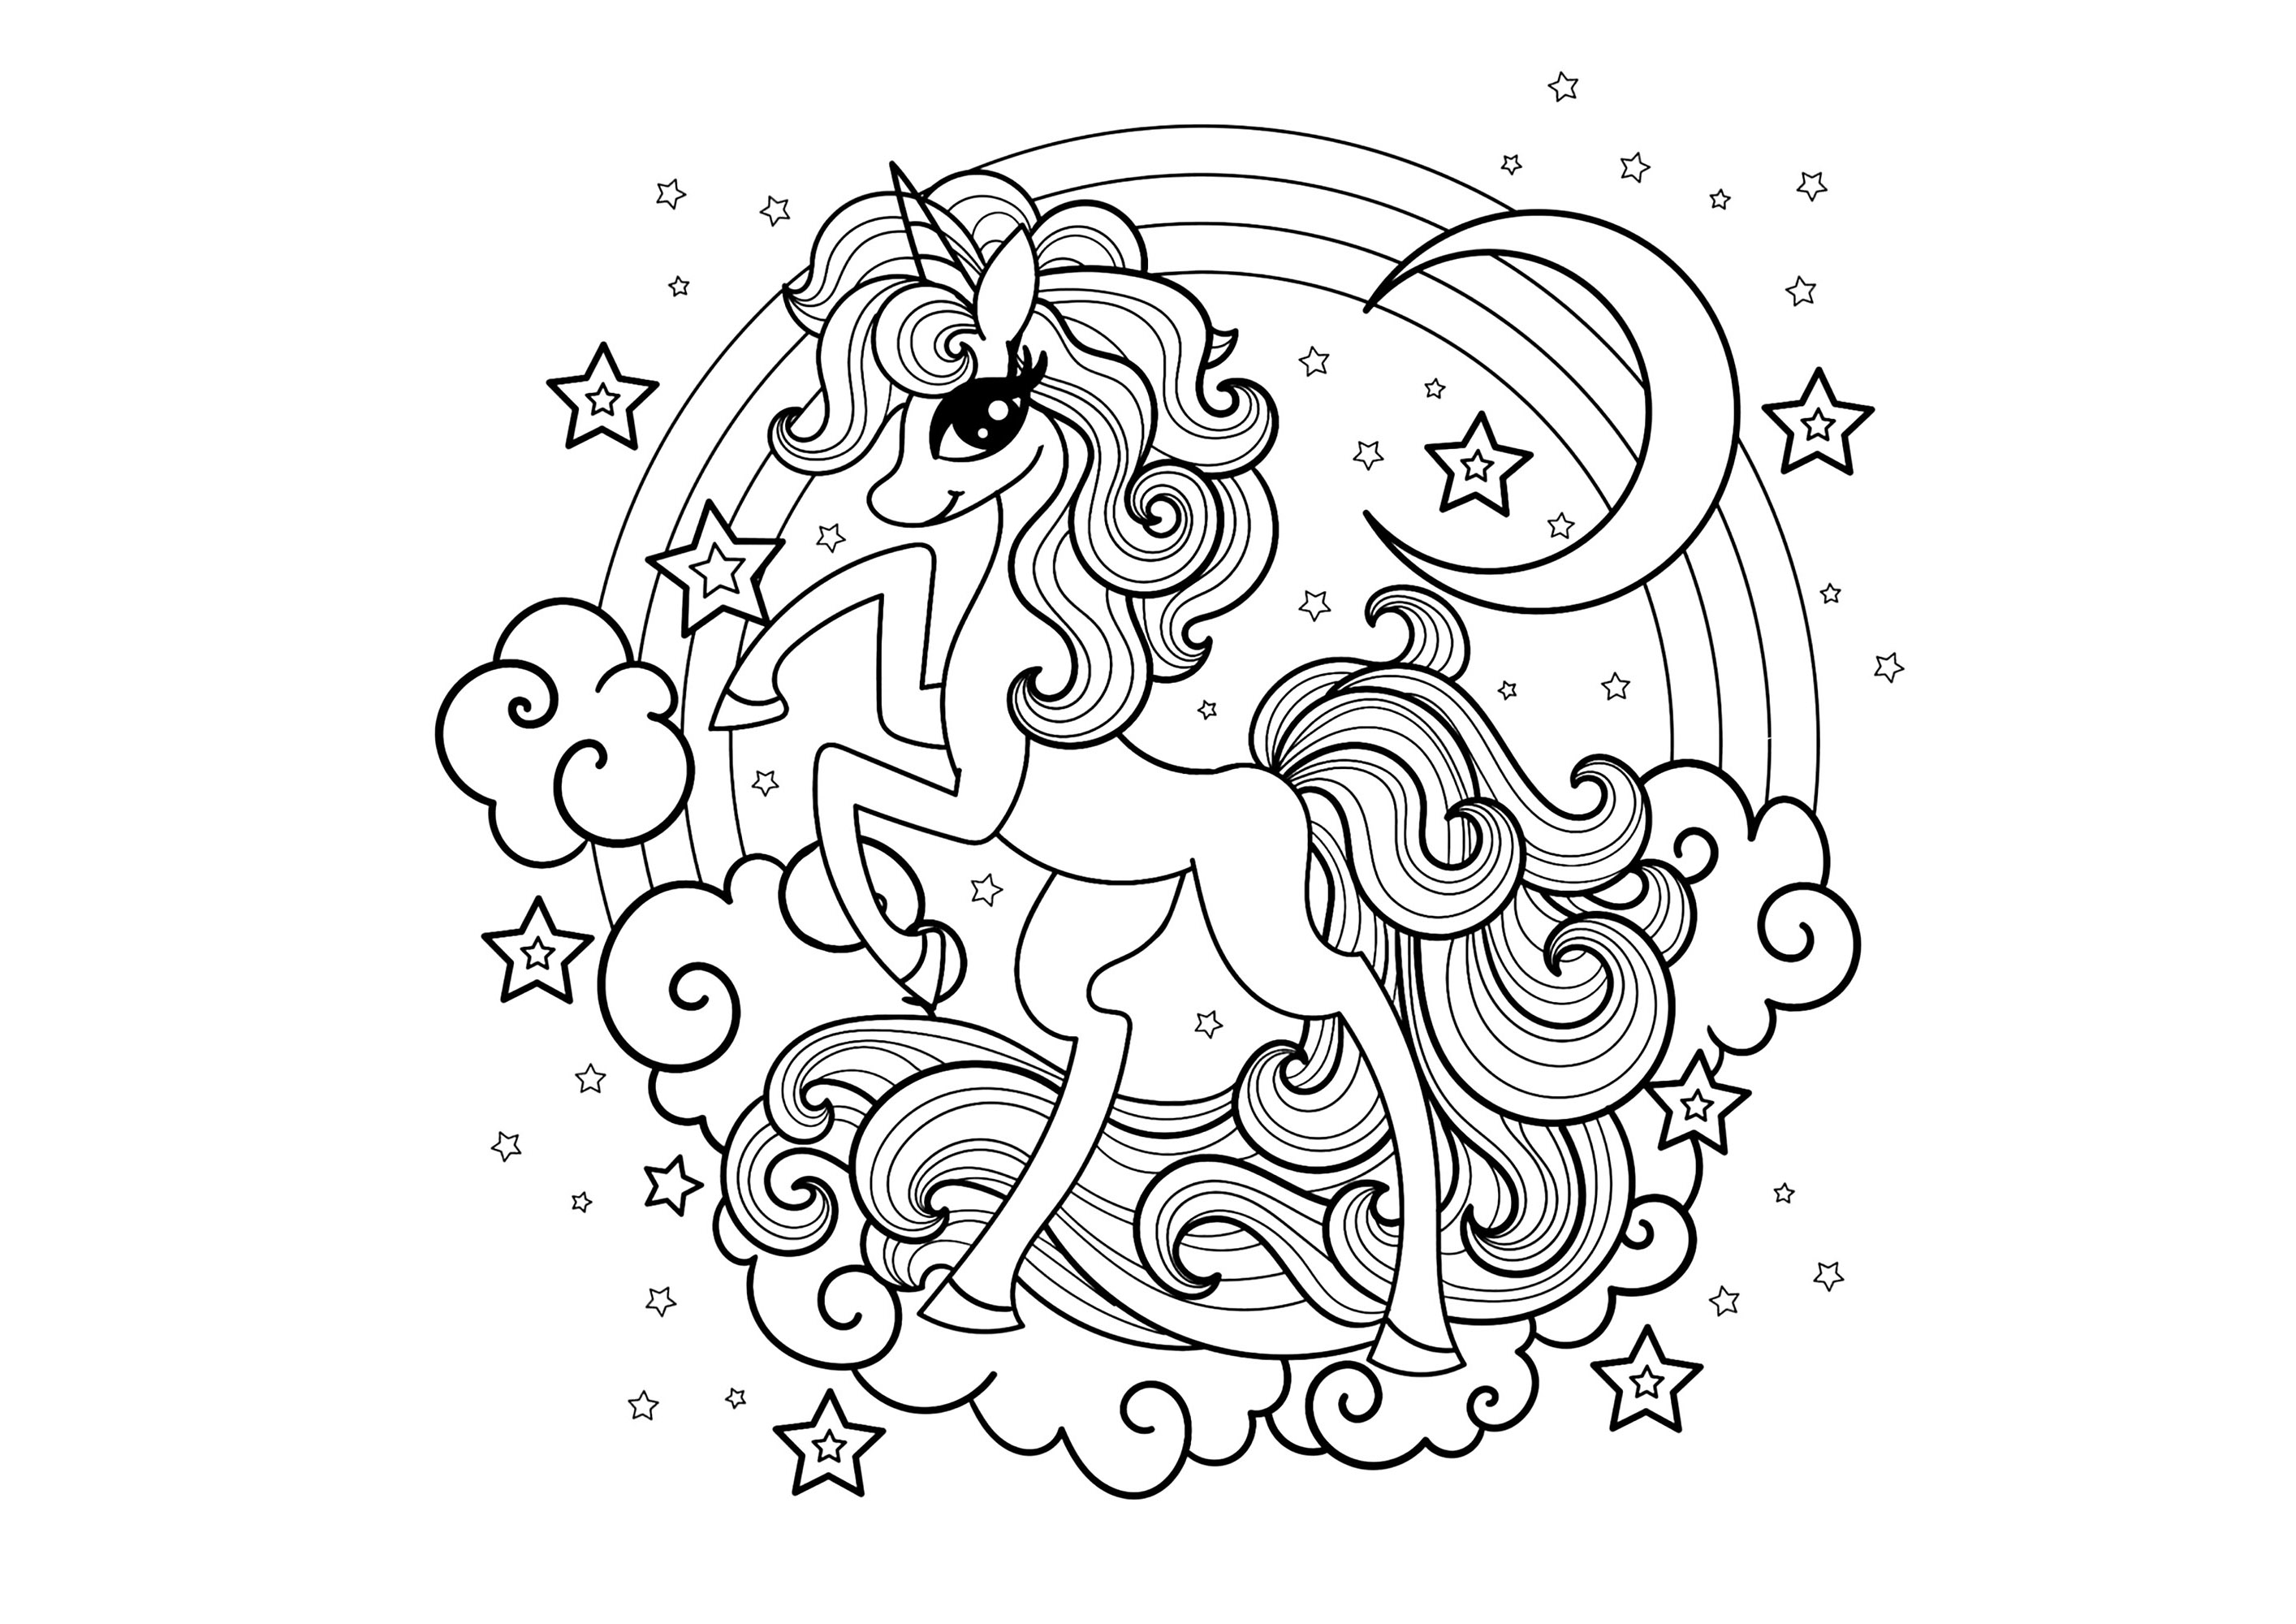 Un unicornio con estilo propio. Bonito unicornio con arco iris, luna, nubes y estrellas, Artista : Zerlina1973   Origen : 123rf